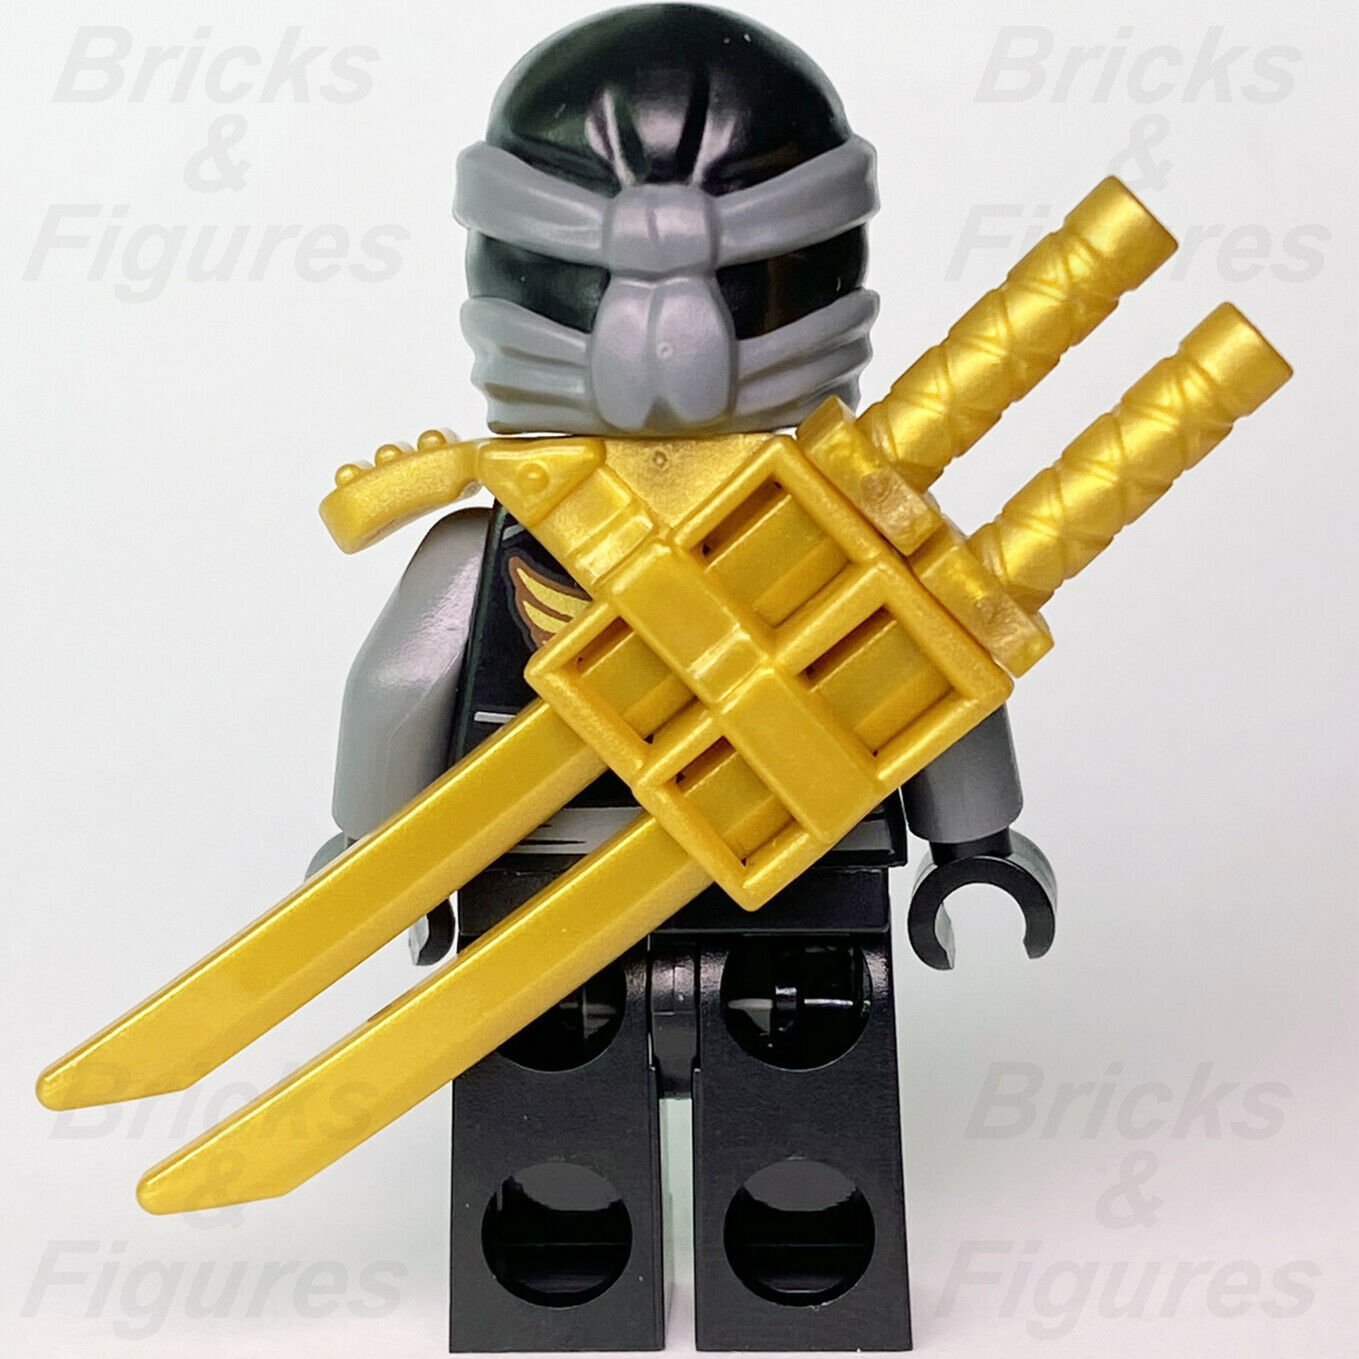 New Ninjago LEGO Ninja Cole with Scabbard Skybound Minifigure 70599 njo199a - Bricks & Figures